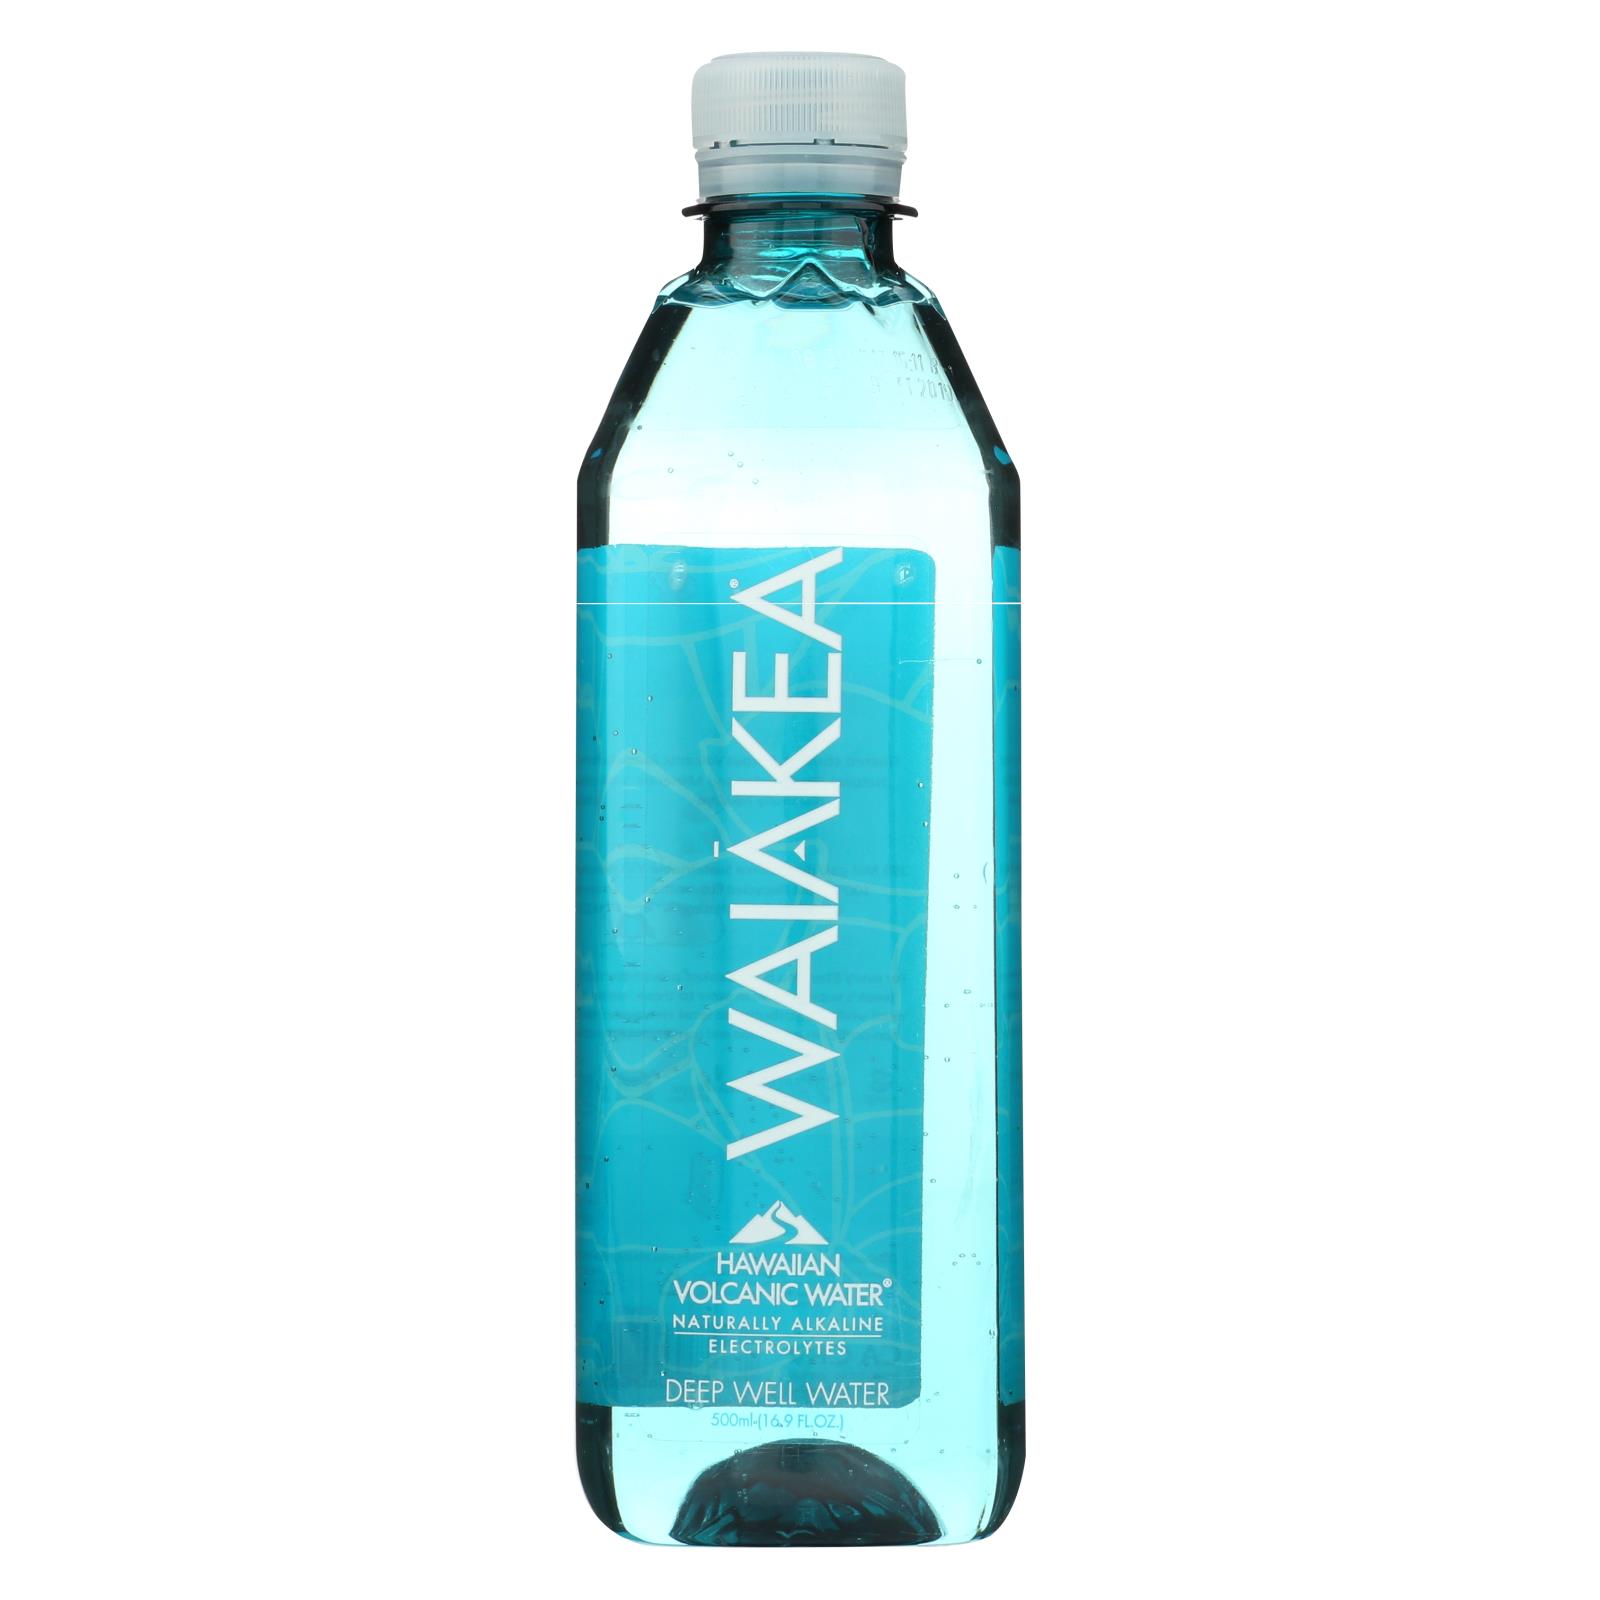 Waiakea Premium Naturally Alkaline Hawaiian Volcanic Bottled Water - 24개 묶음상품 - 16.9 FZ